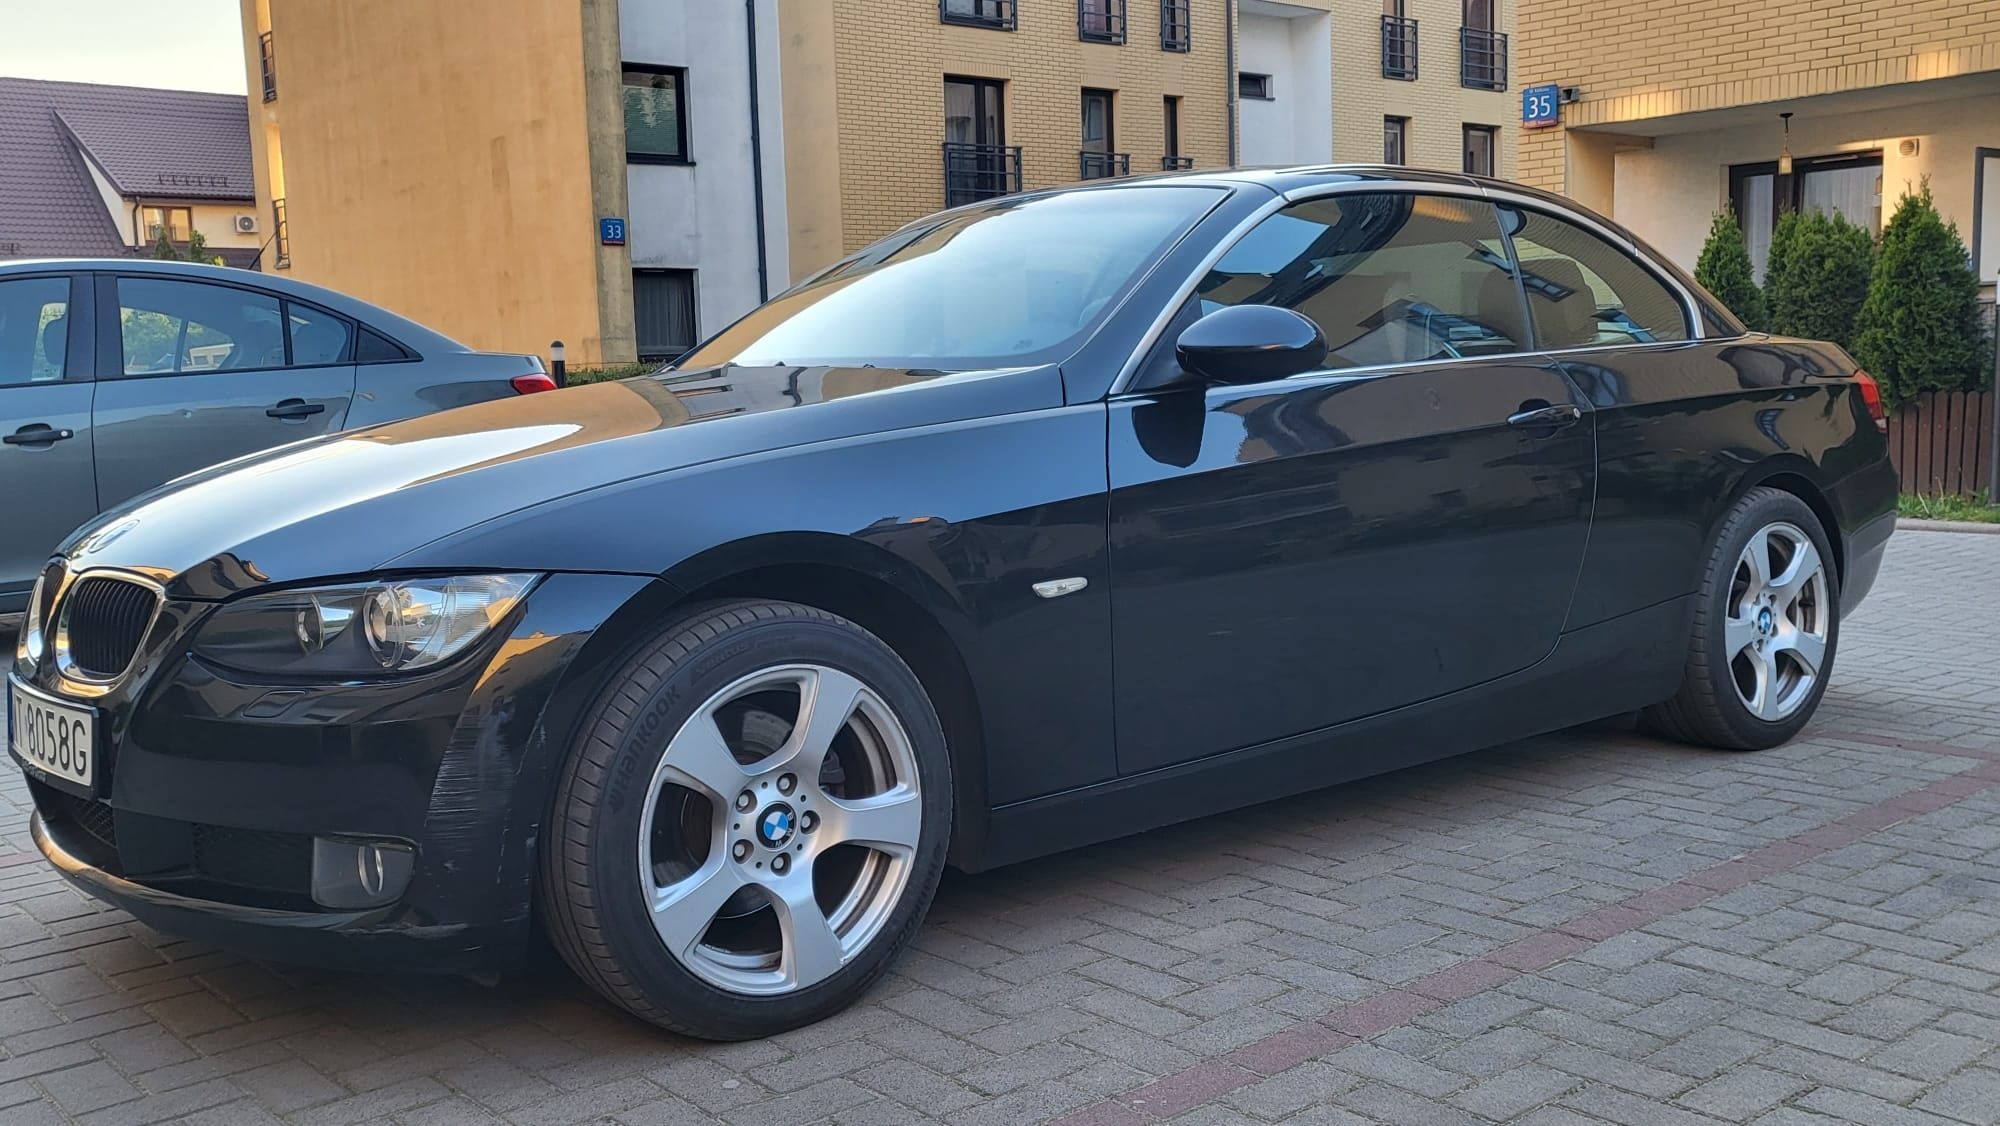 BMW E93 CABRIO 2,0 BENZYNA 170 KM .Piękne auto na lato